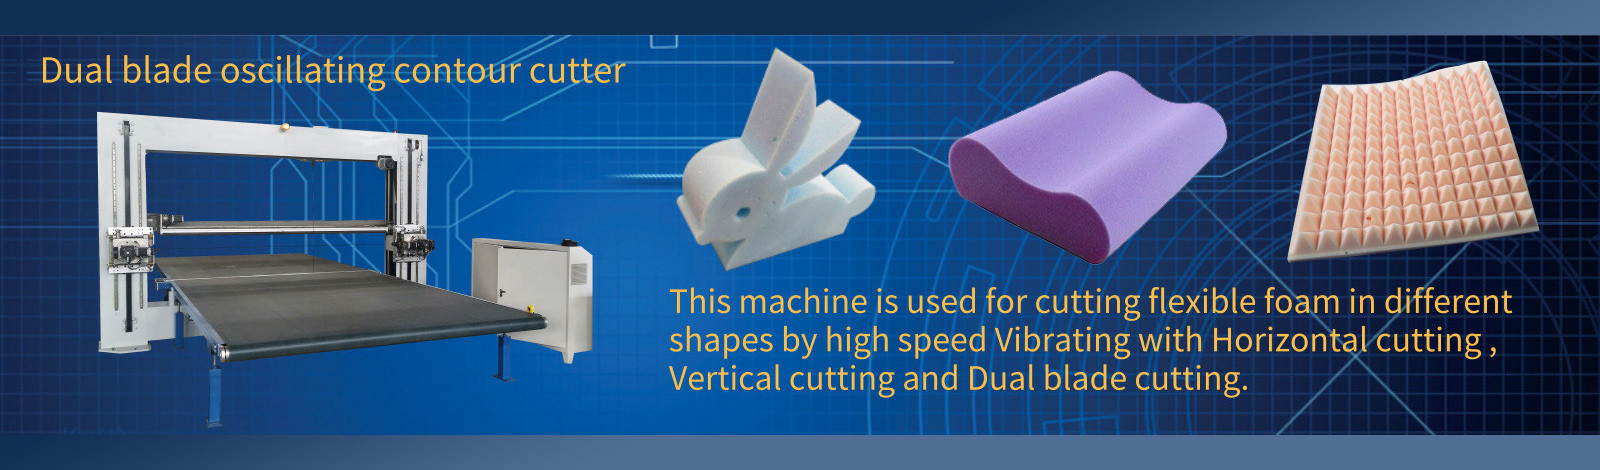 Автомат для резки контура CNC